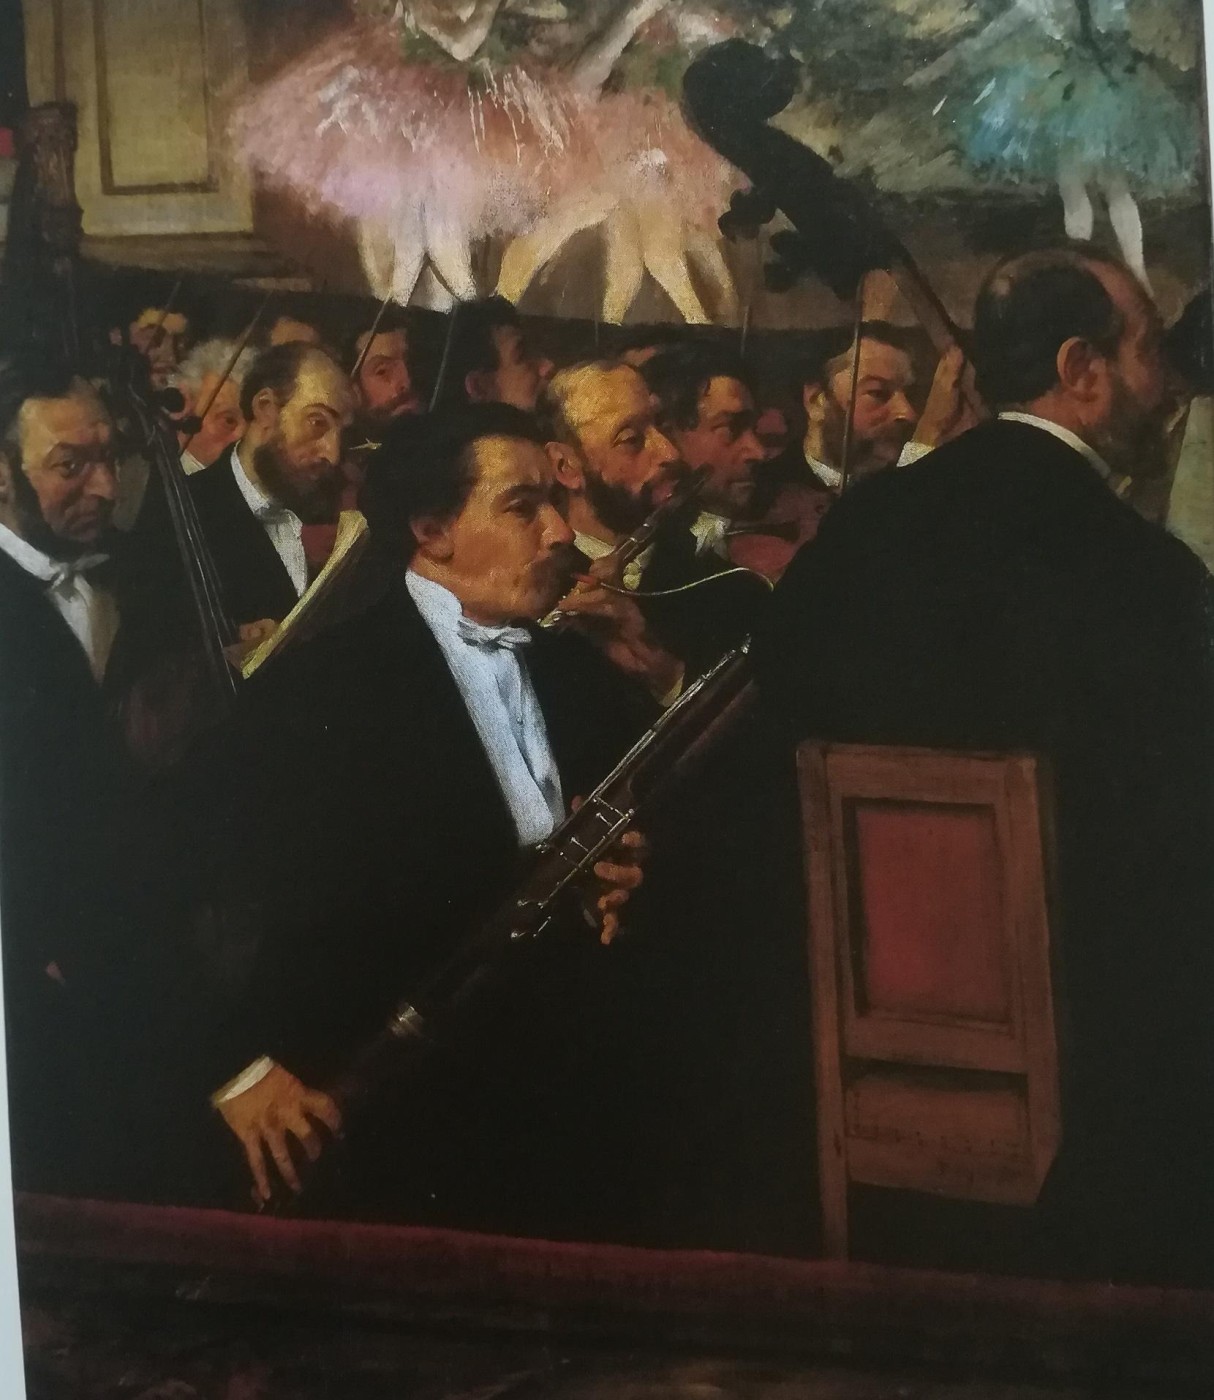 l’orchestra dell’Opéra - Edgar Degas, 1870